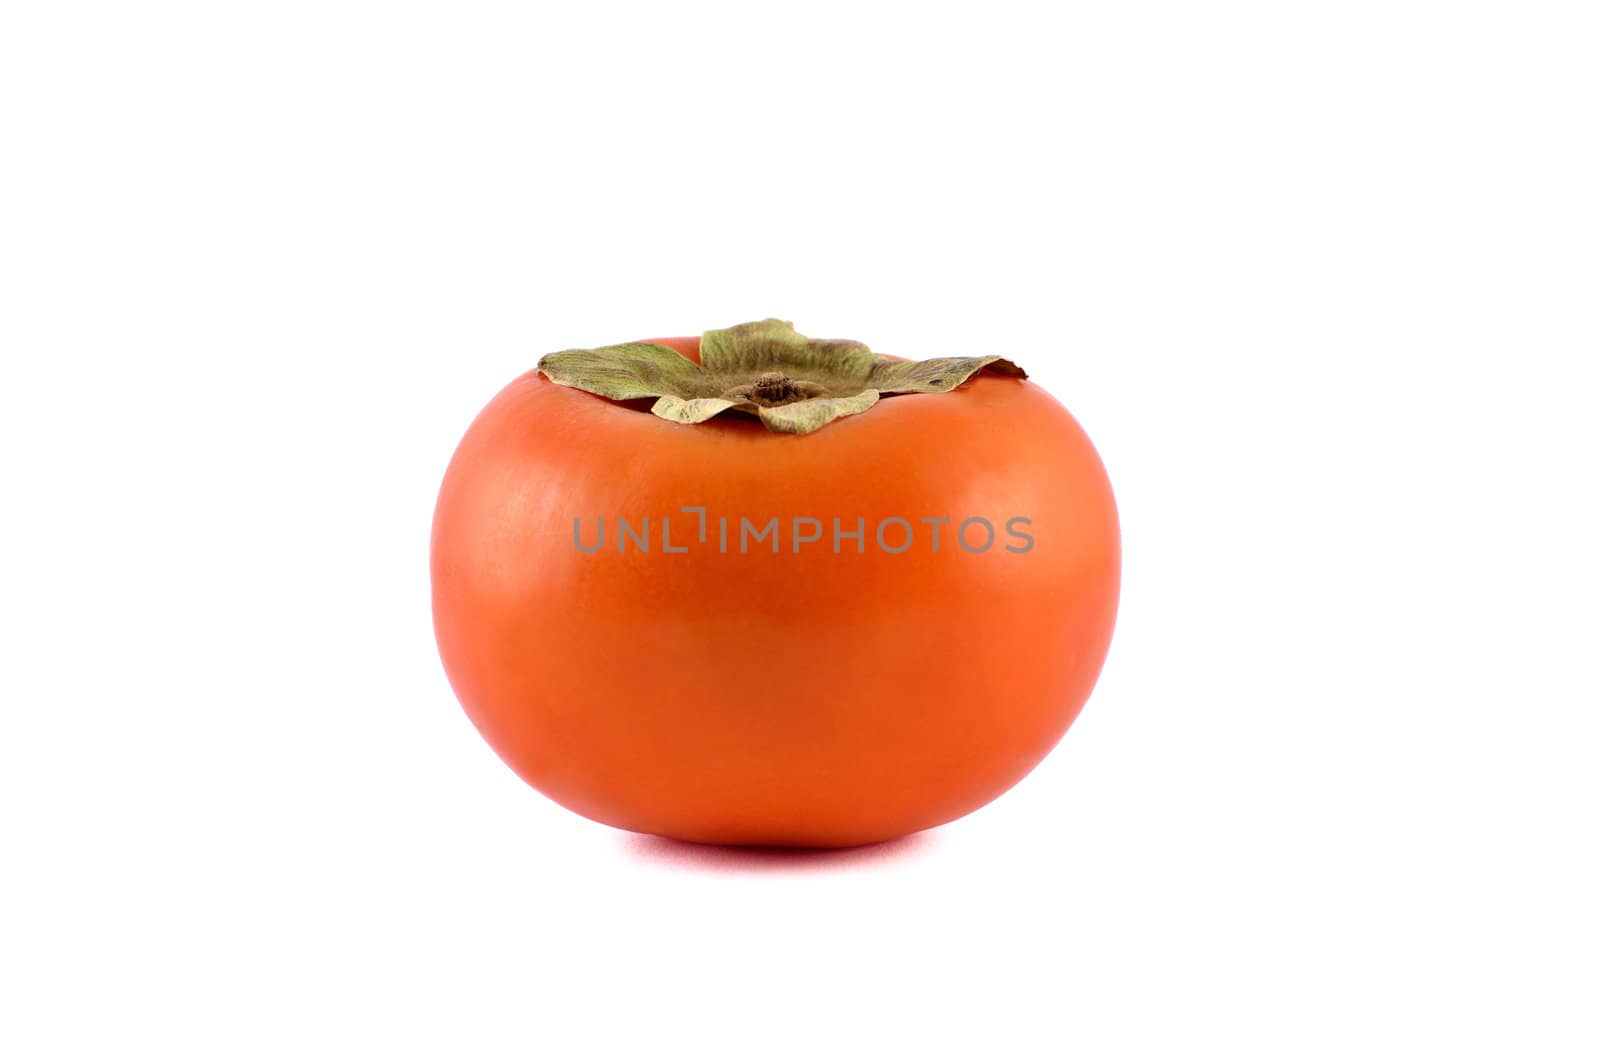 A persimmon